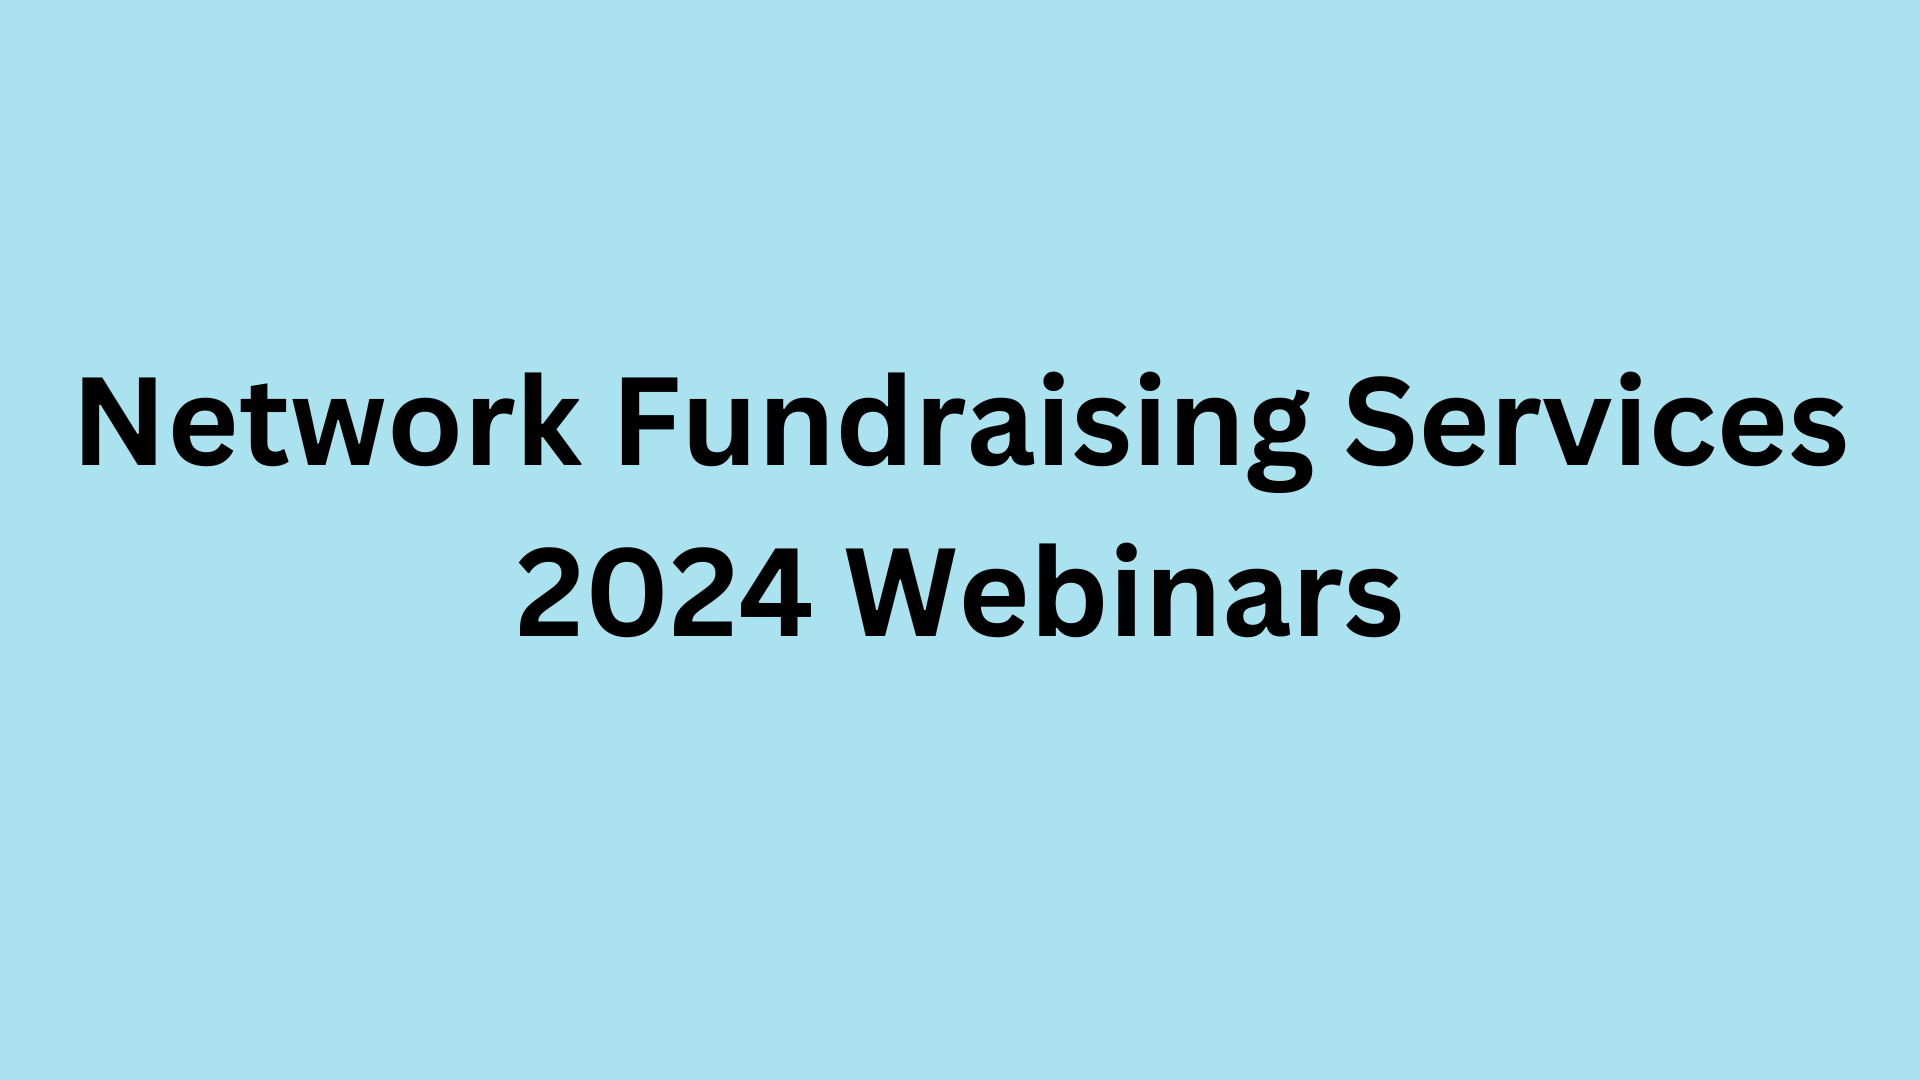 Network Fundraising Services 2024 Webinars